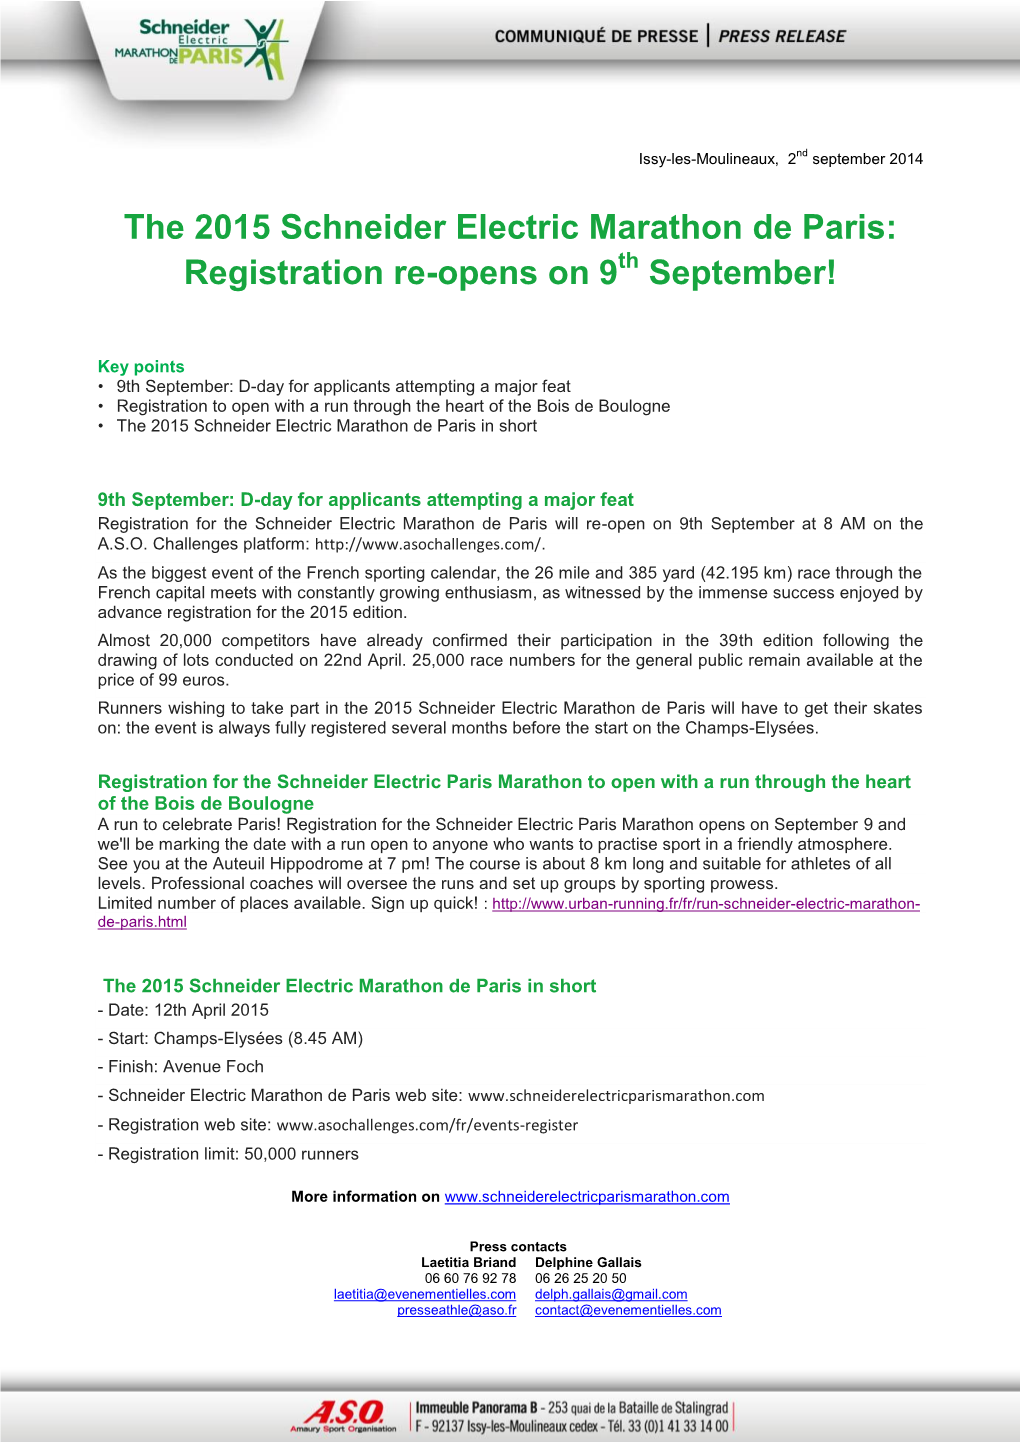 The 2015 Schneider Electric Marathon De Paris: Registration Re-Opens on 9Th September!